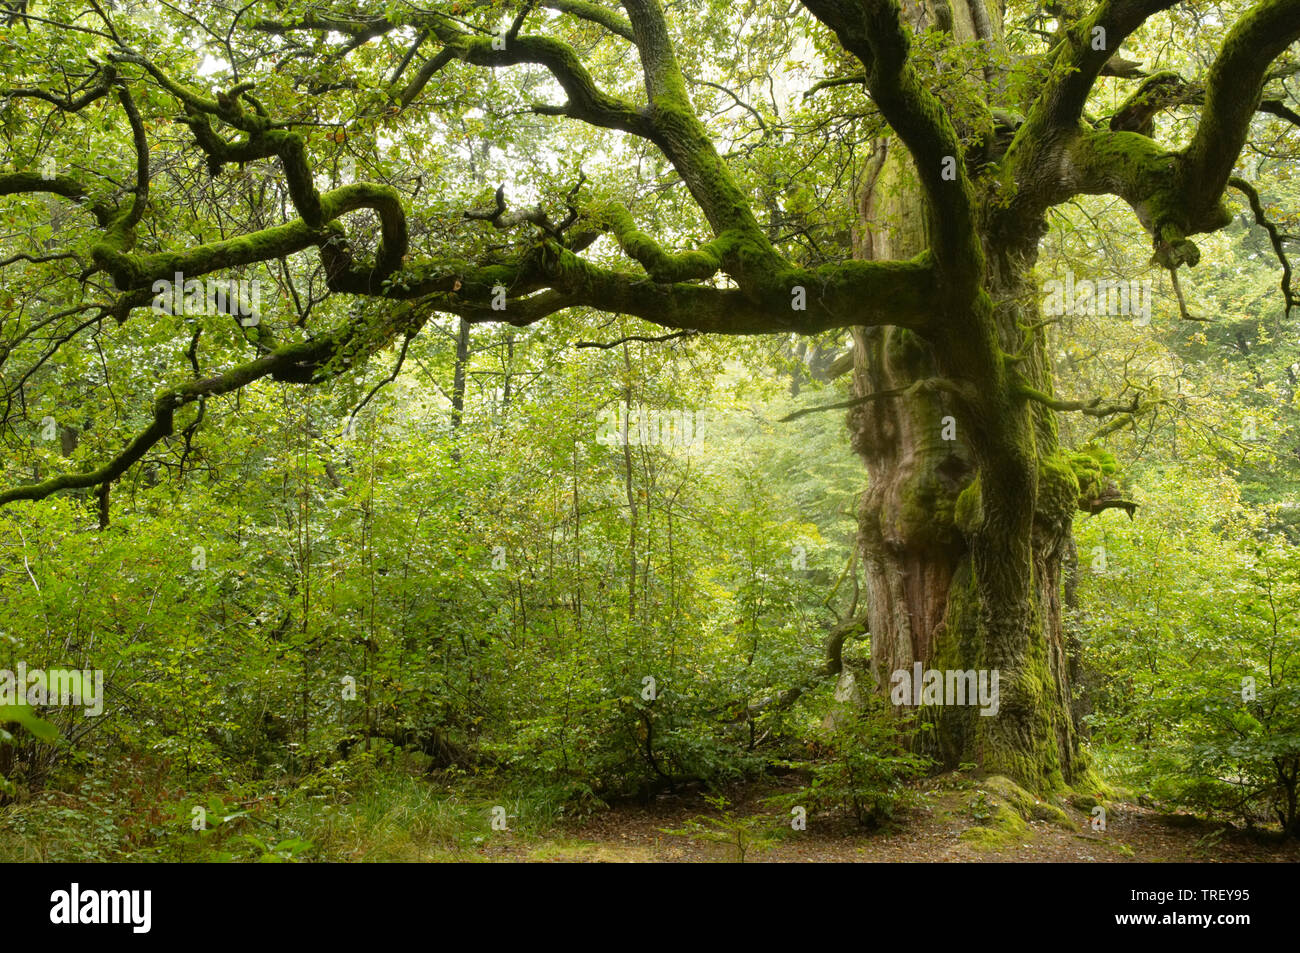 Pendulate Quercia farnia (Quercus robur). Antica quercia nella vecchia foresta. Foto Stock